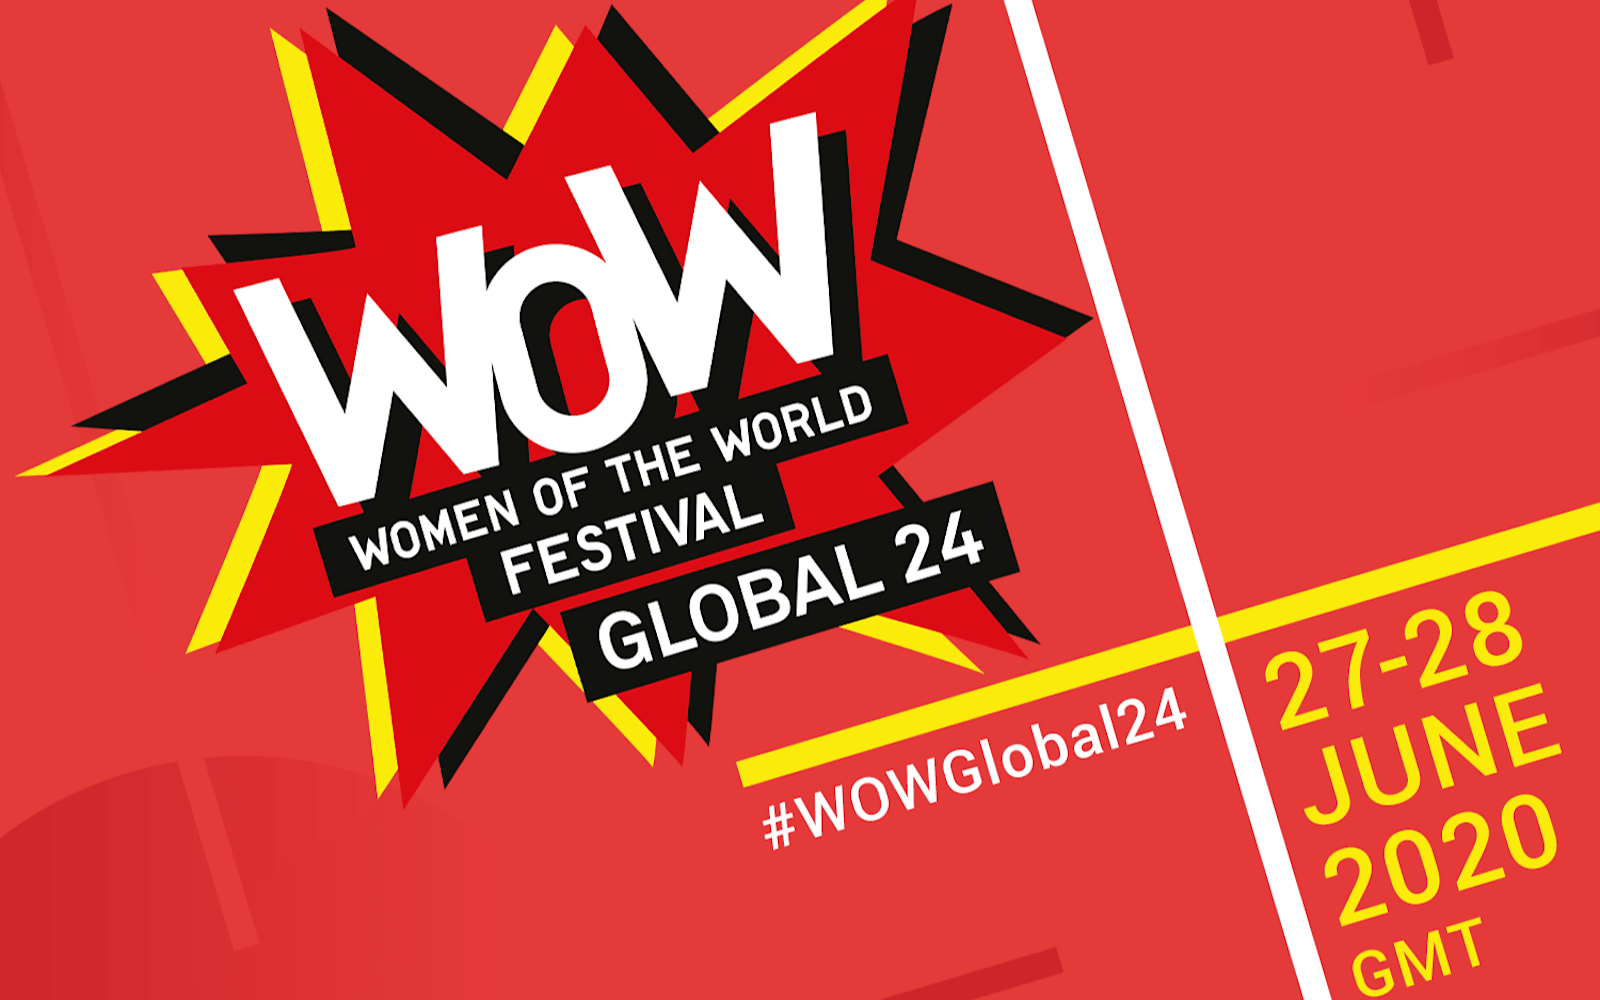 Pop Art style poster reading WOW Women of the World Festival Global 24 #WOWGlobal24 27-28 June 2020